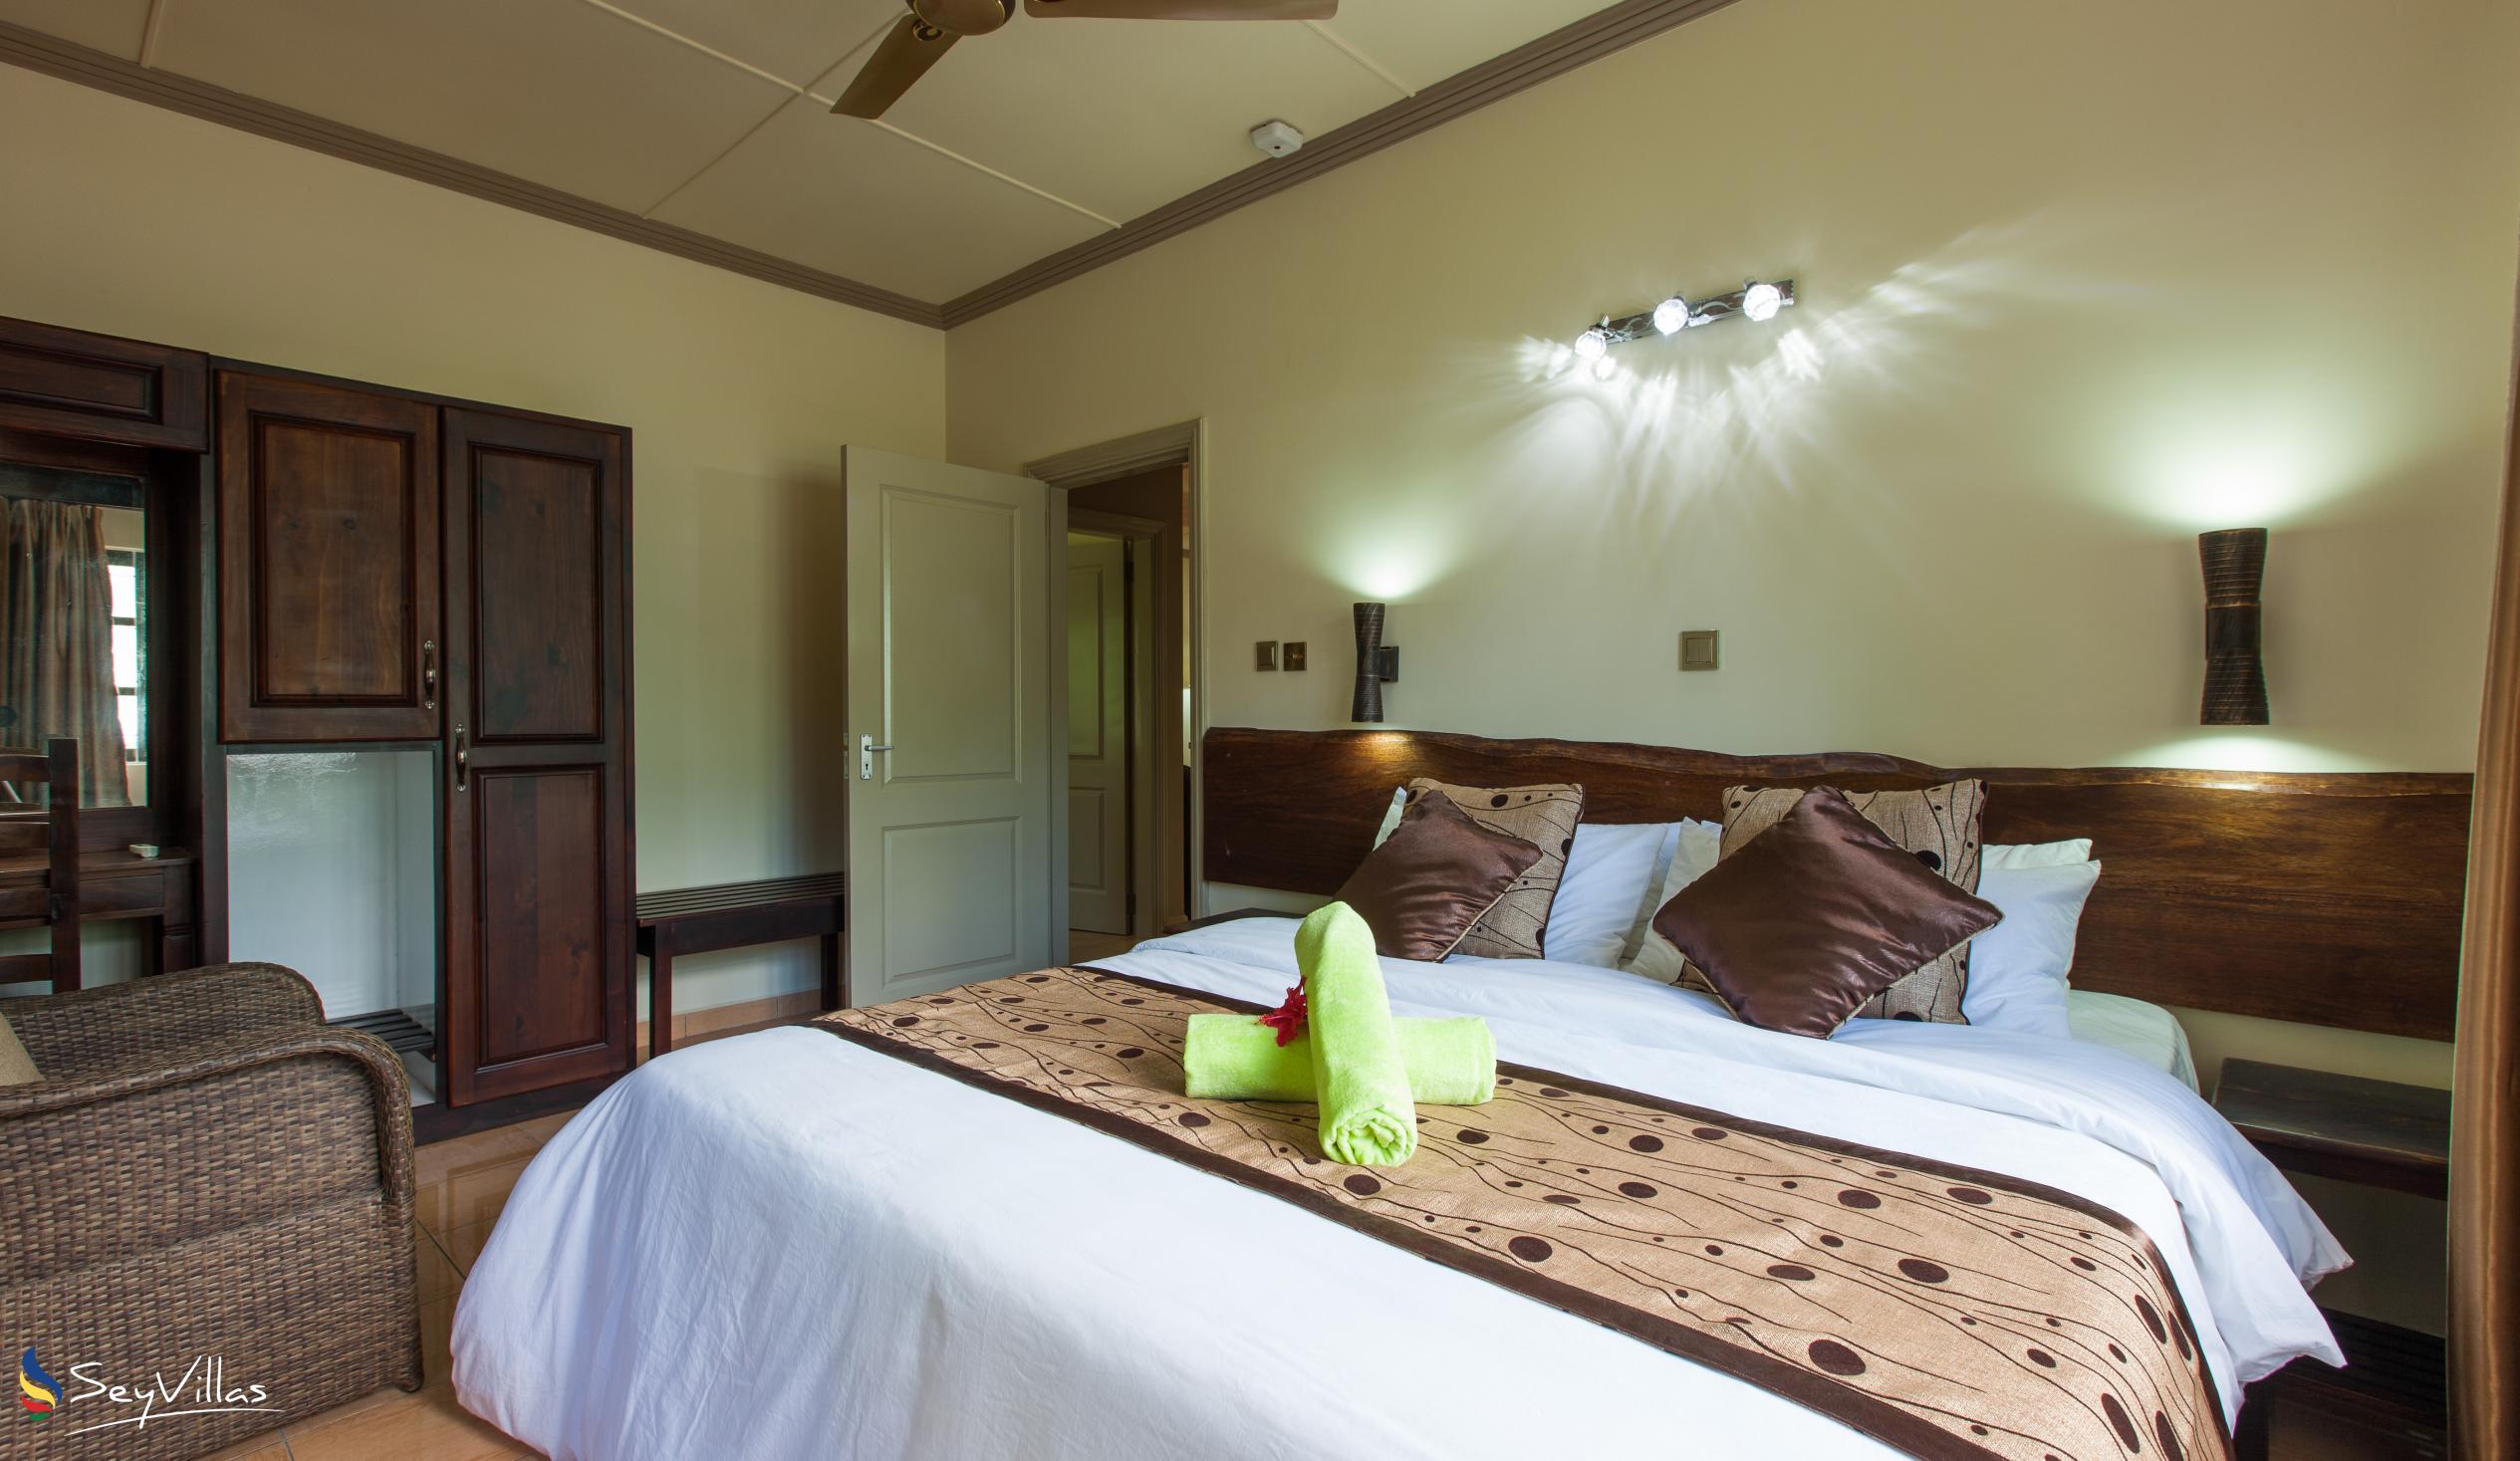 Photo 82: Chez Bea Villa - Superior Room - Praslin (Seychelles)